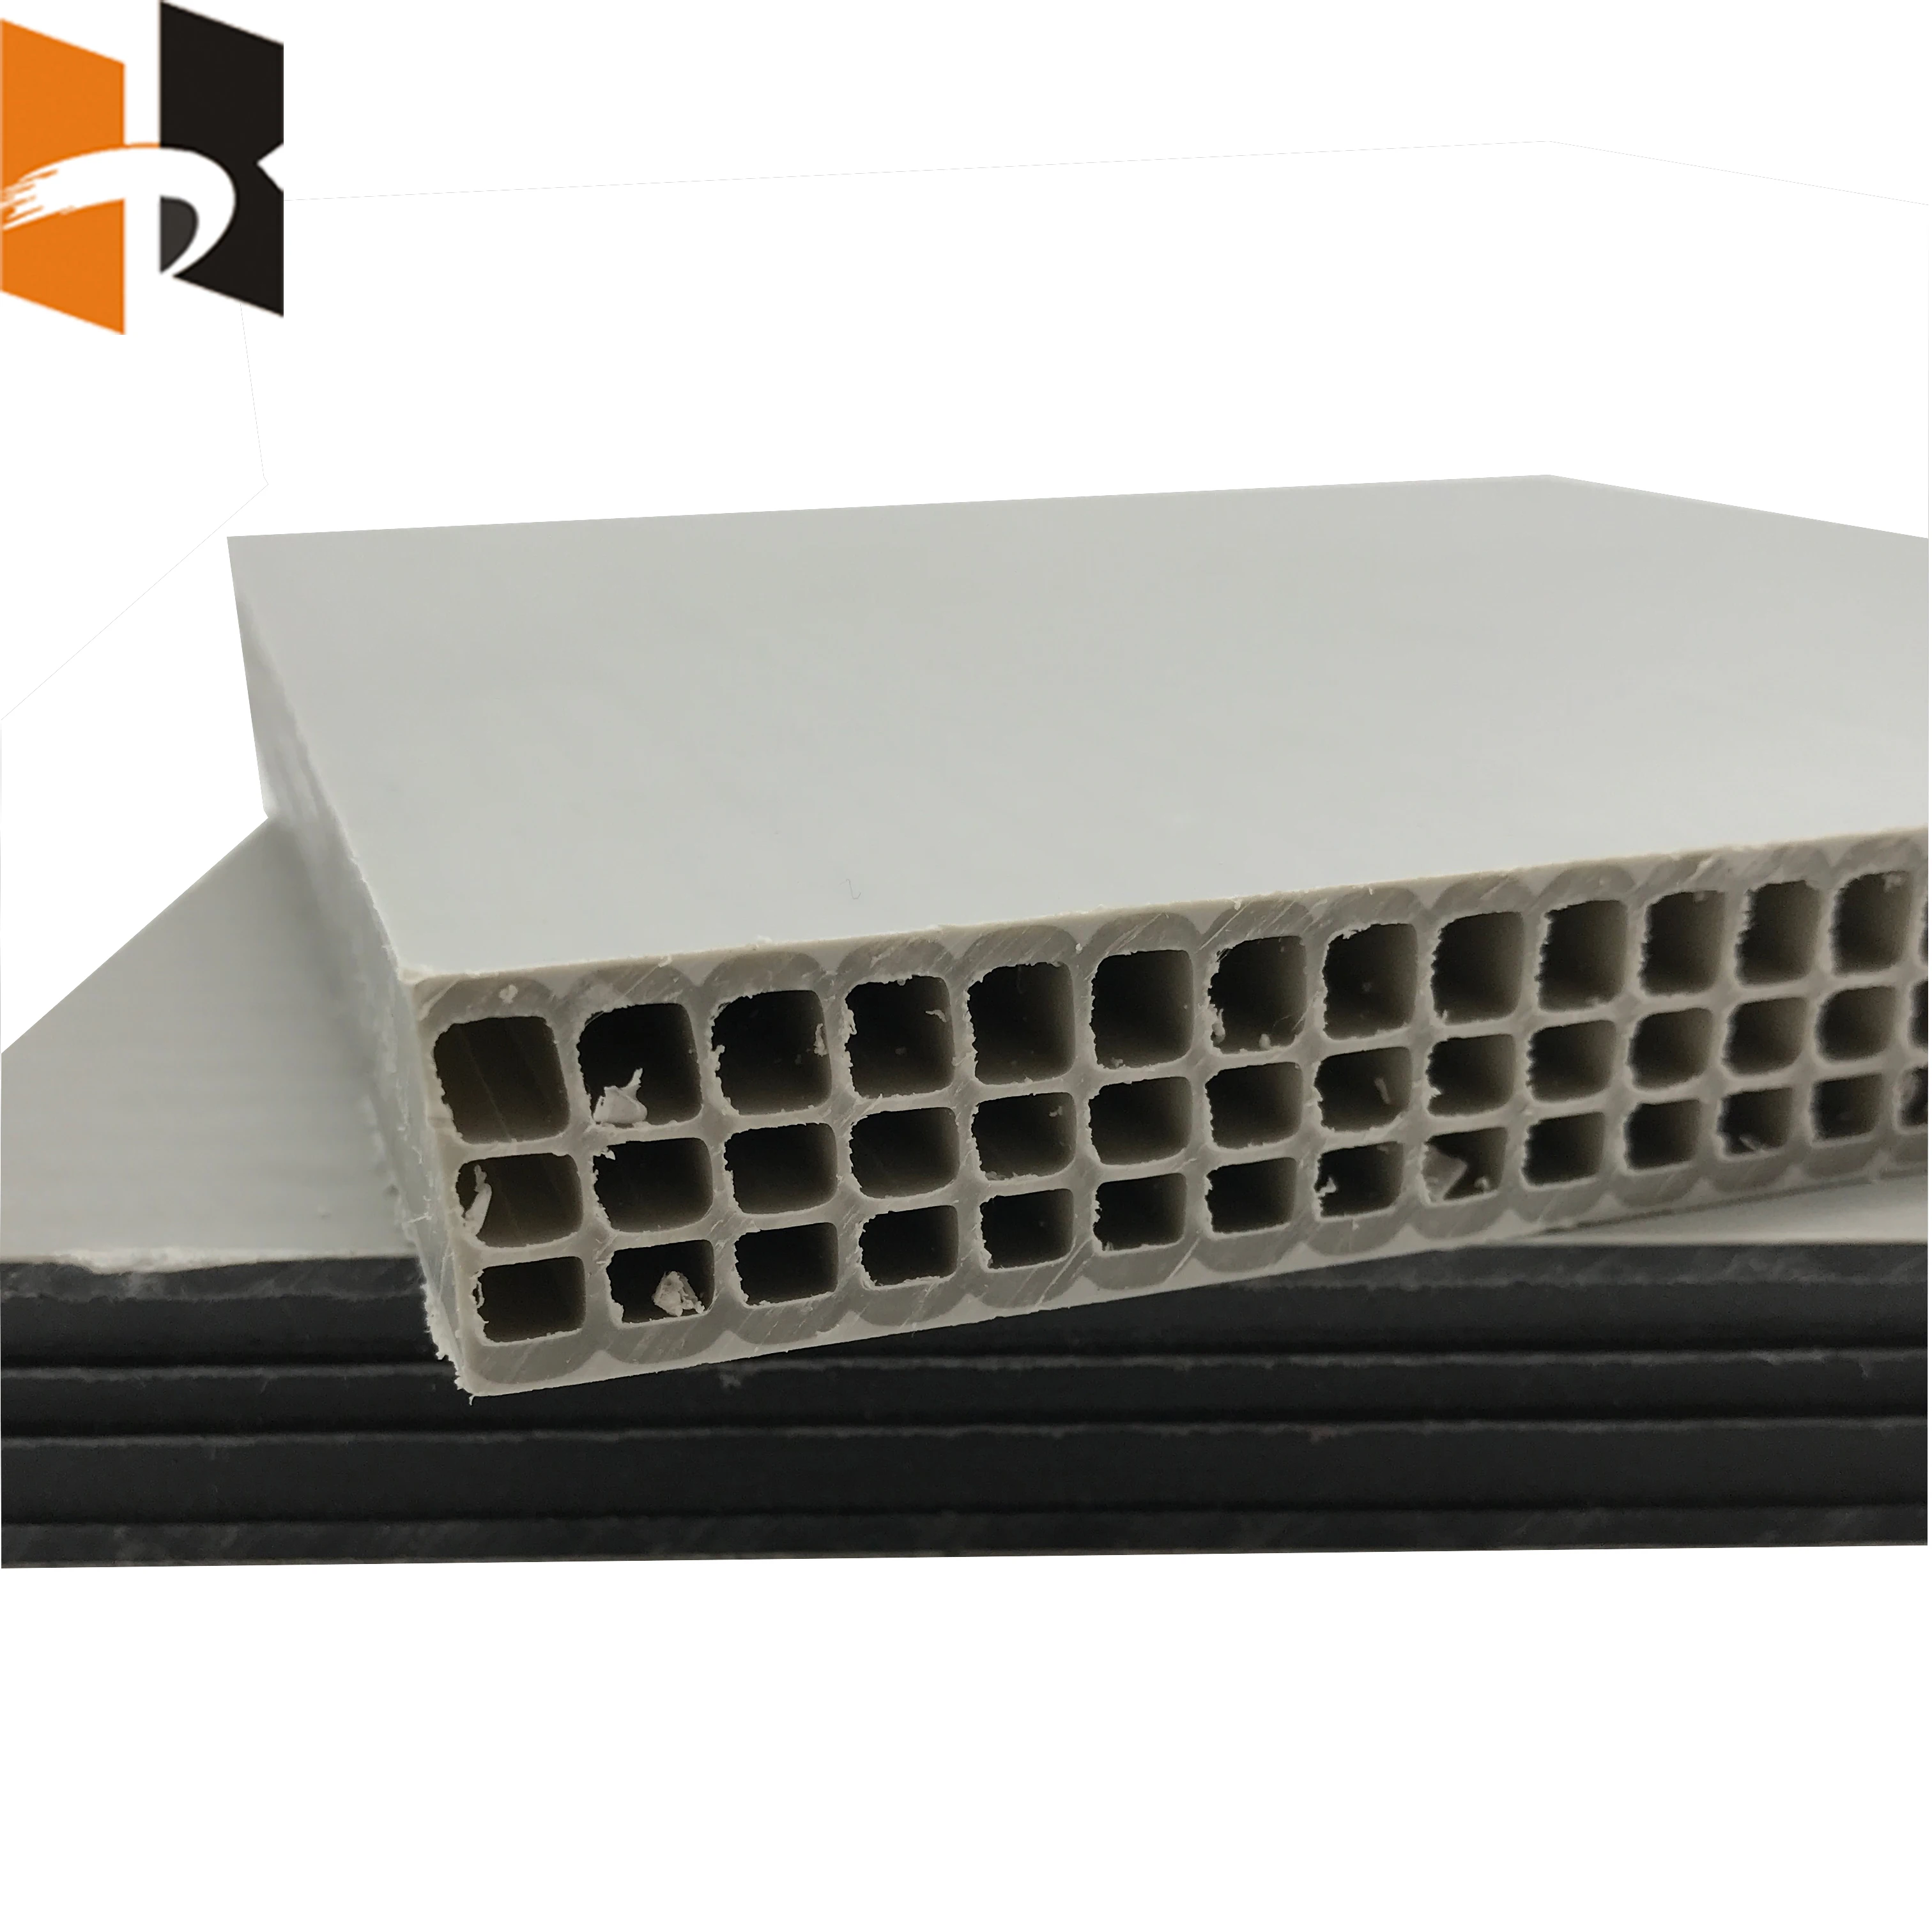 
Construction High Density Concrete Wall board Hollow Plastic Formwork  (62404145040)